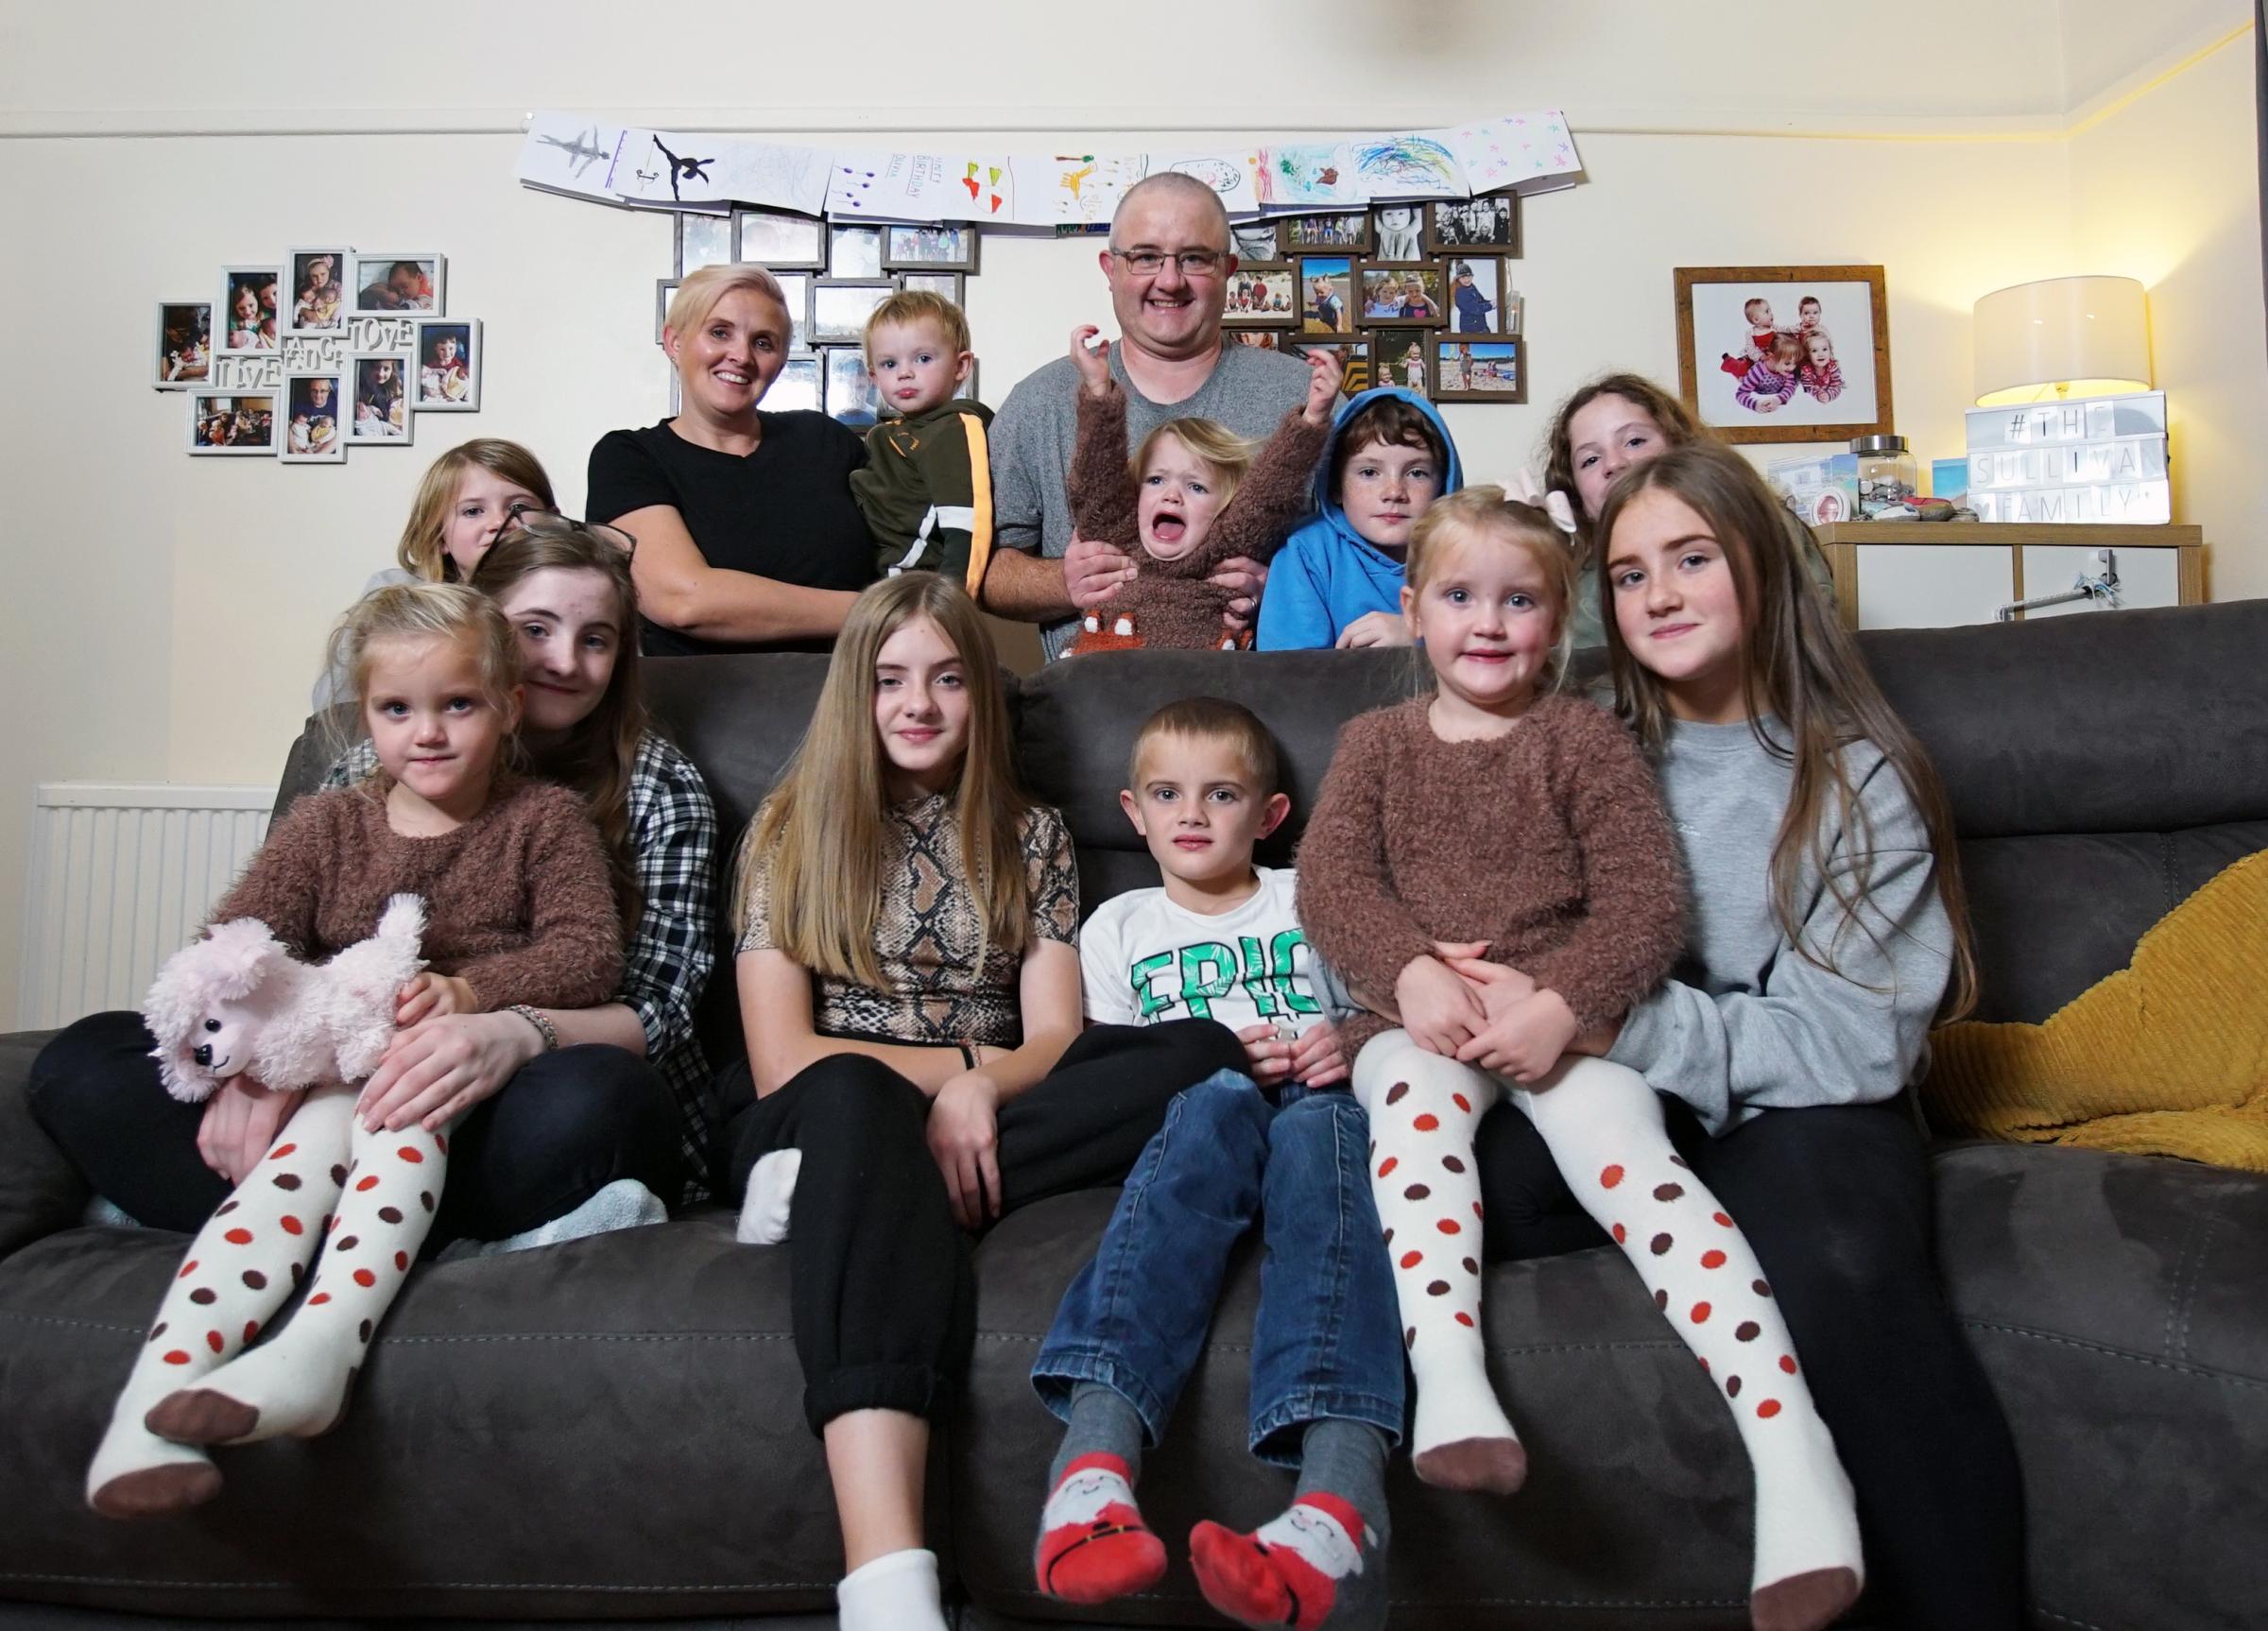 The Sullivan Family in Scotland: Mum Zoe and Dad Ben with their 11 children